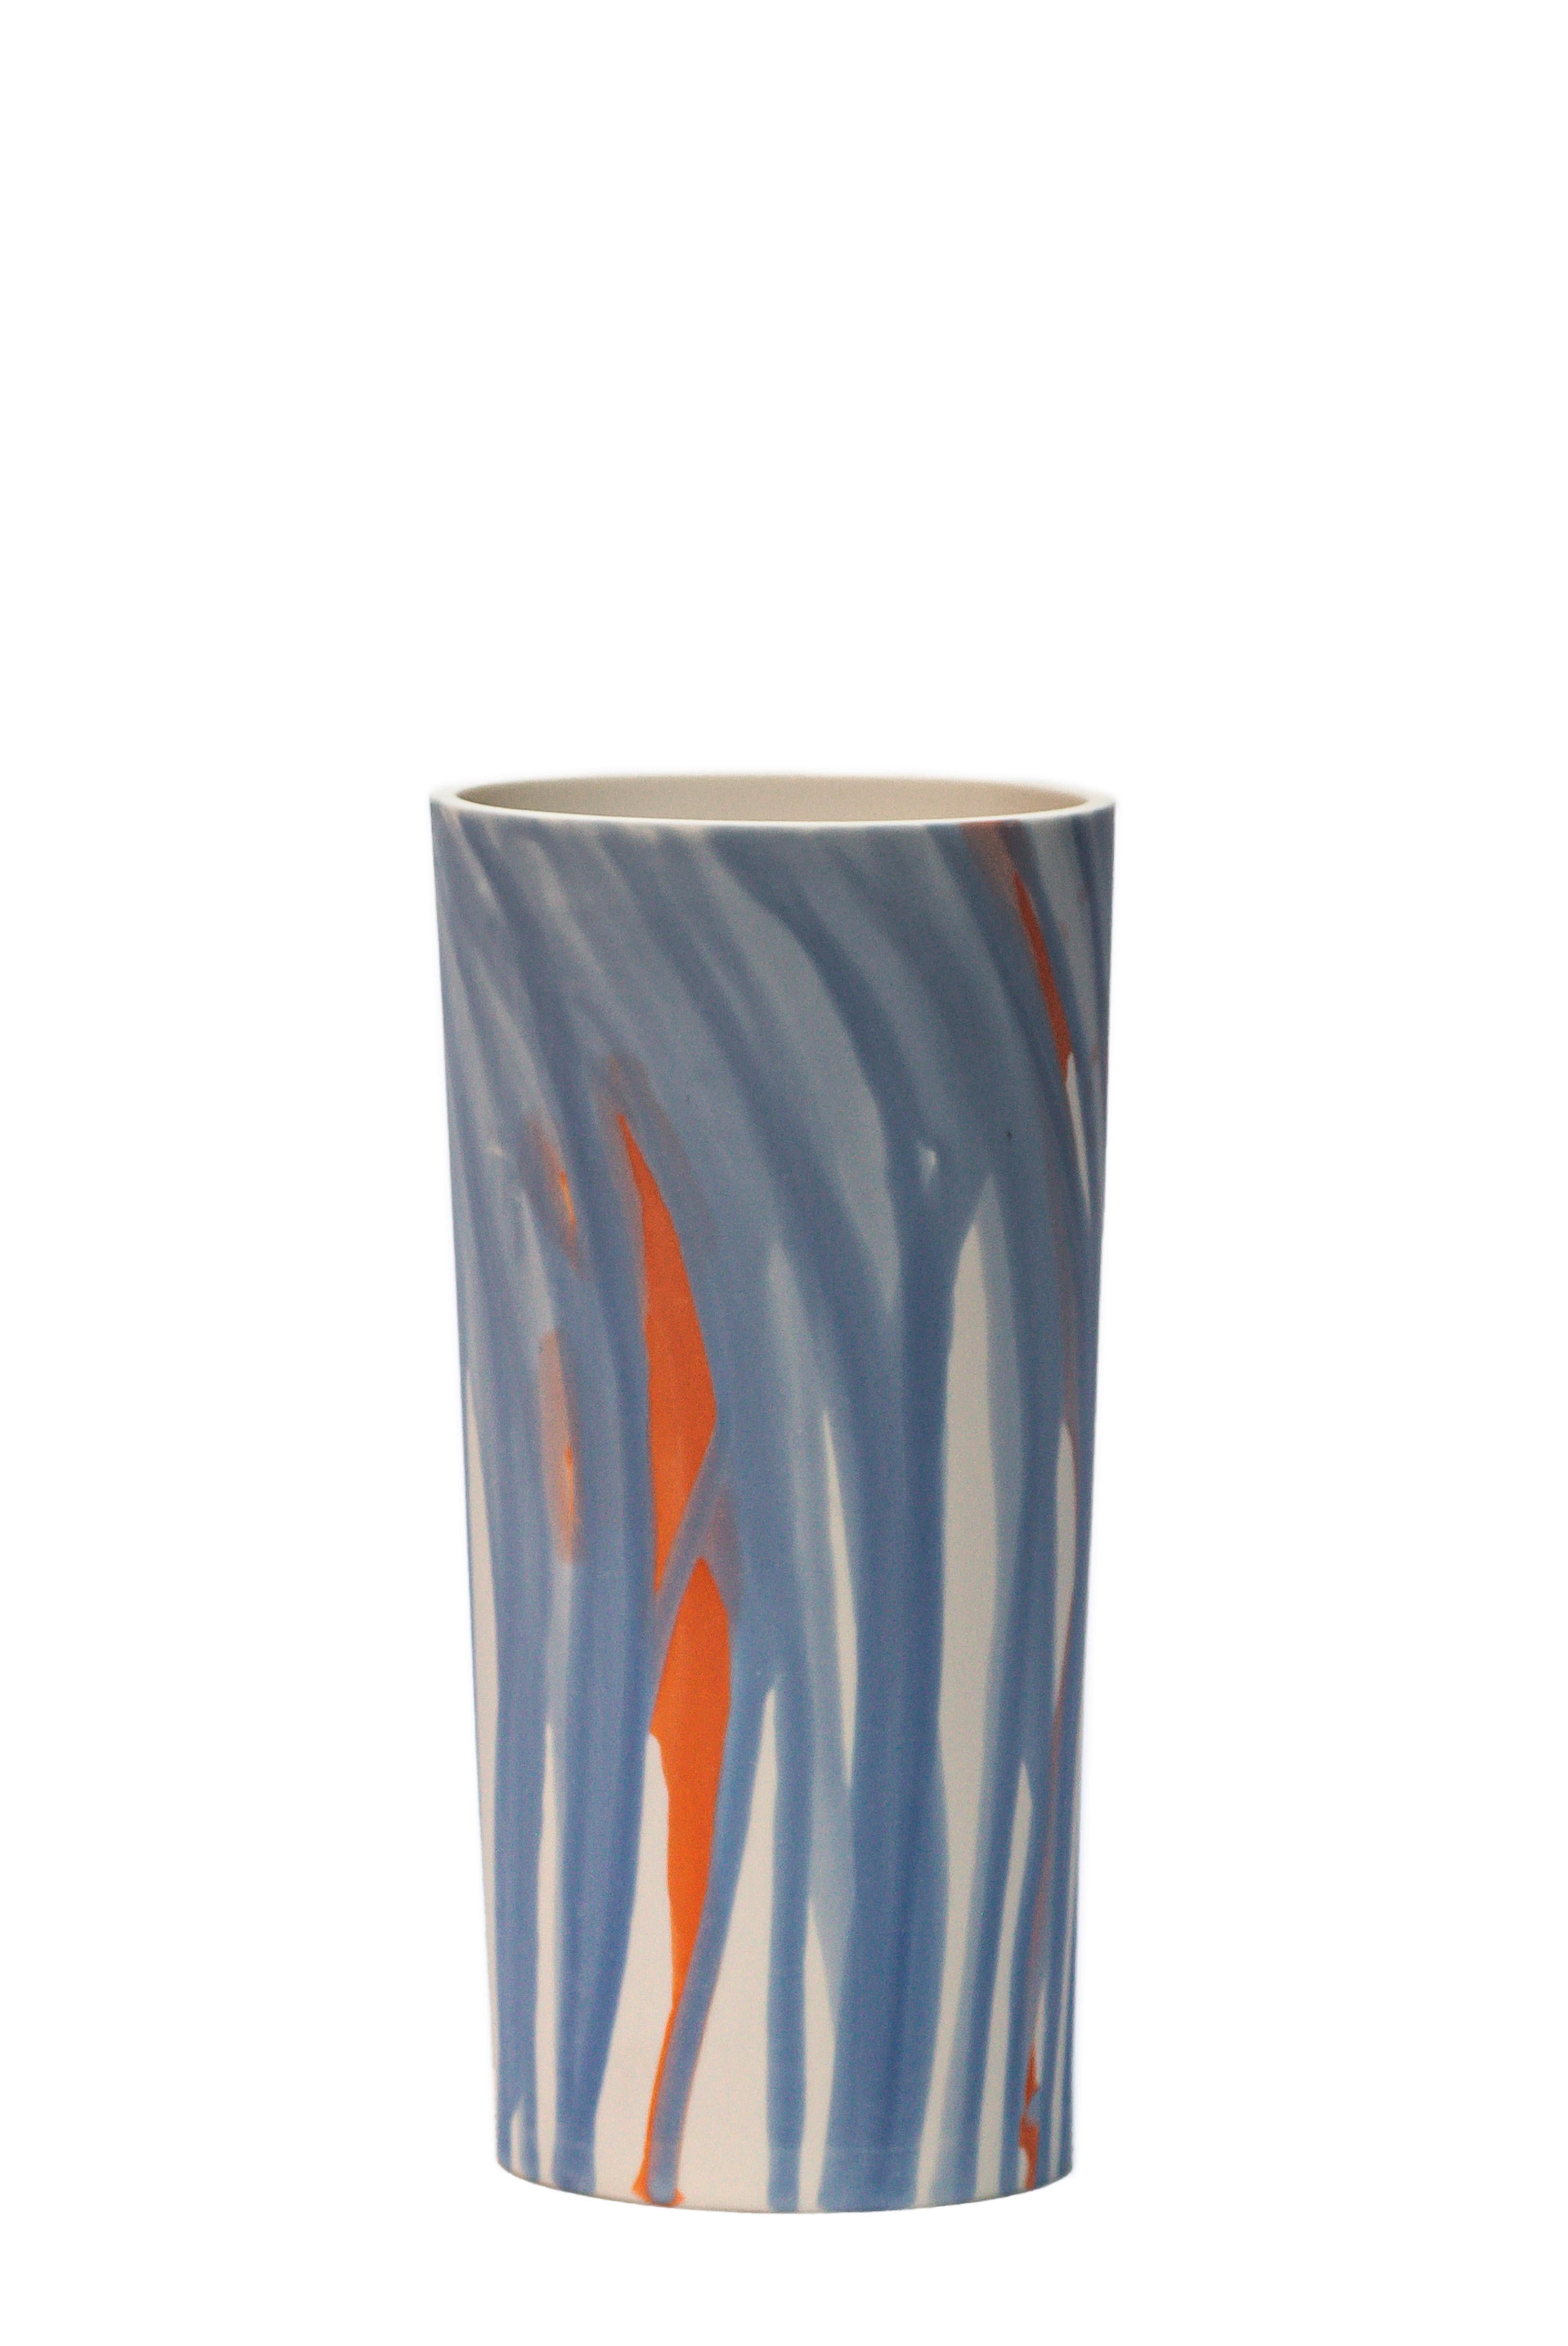 British Salmon and Sky Porcelain Vase Unique Parianware Contemporary 21st Century UK